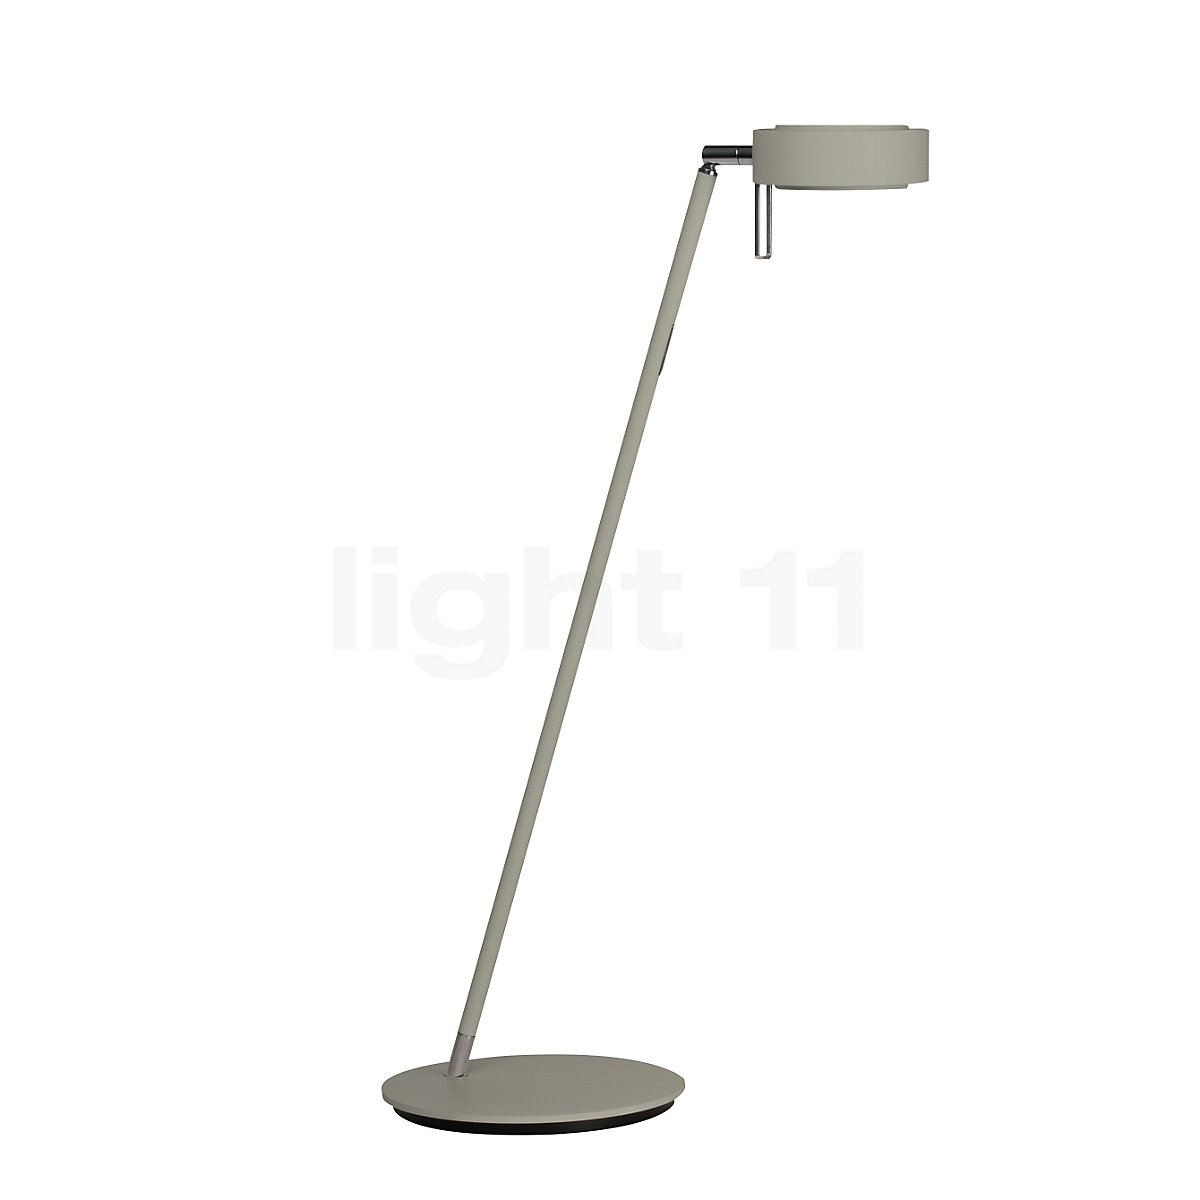 Gedachte Vroeg verzoek Buy Mawa Pure Table lamp LED at light11.eu